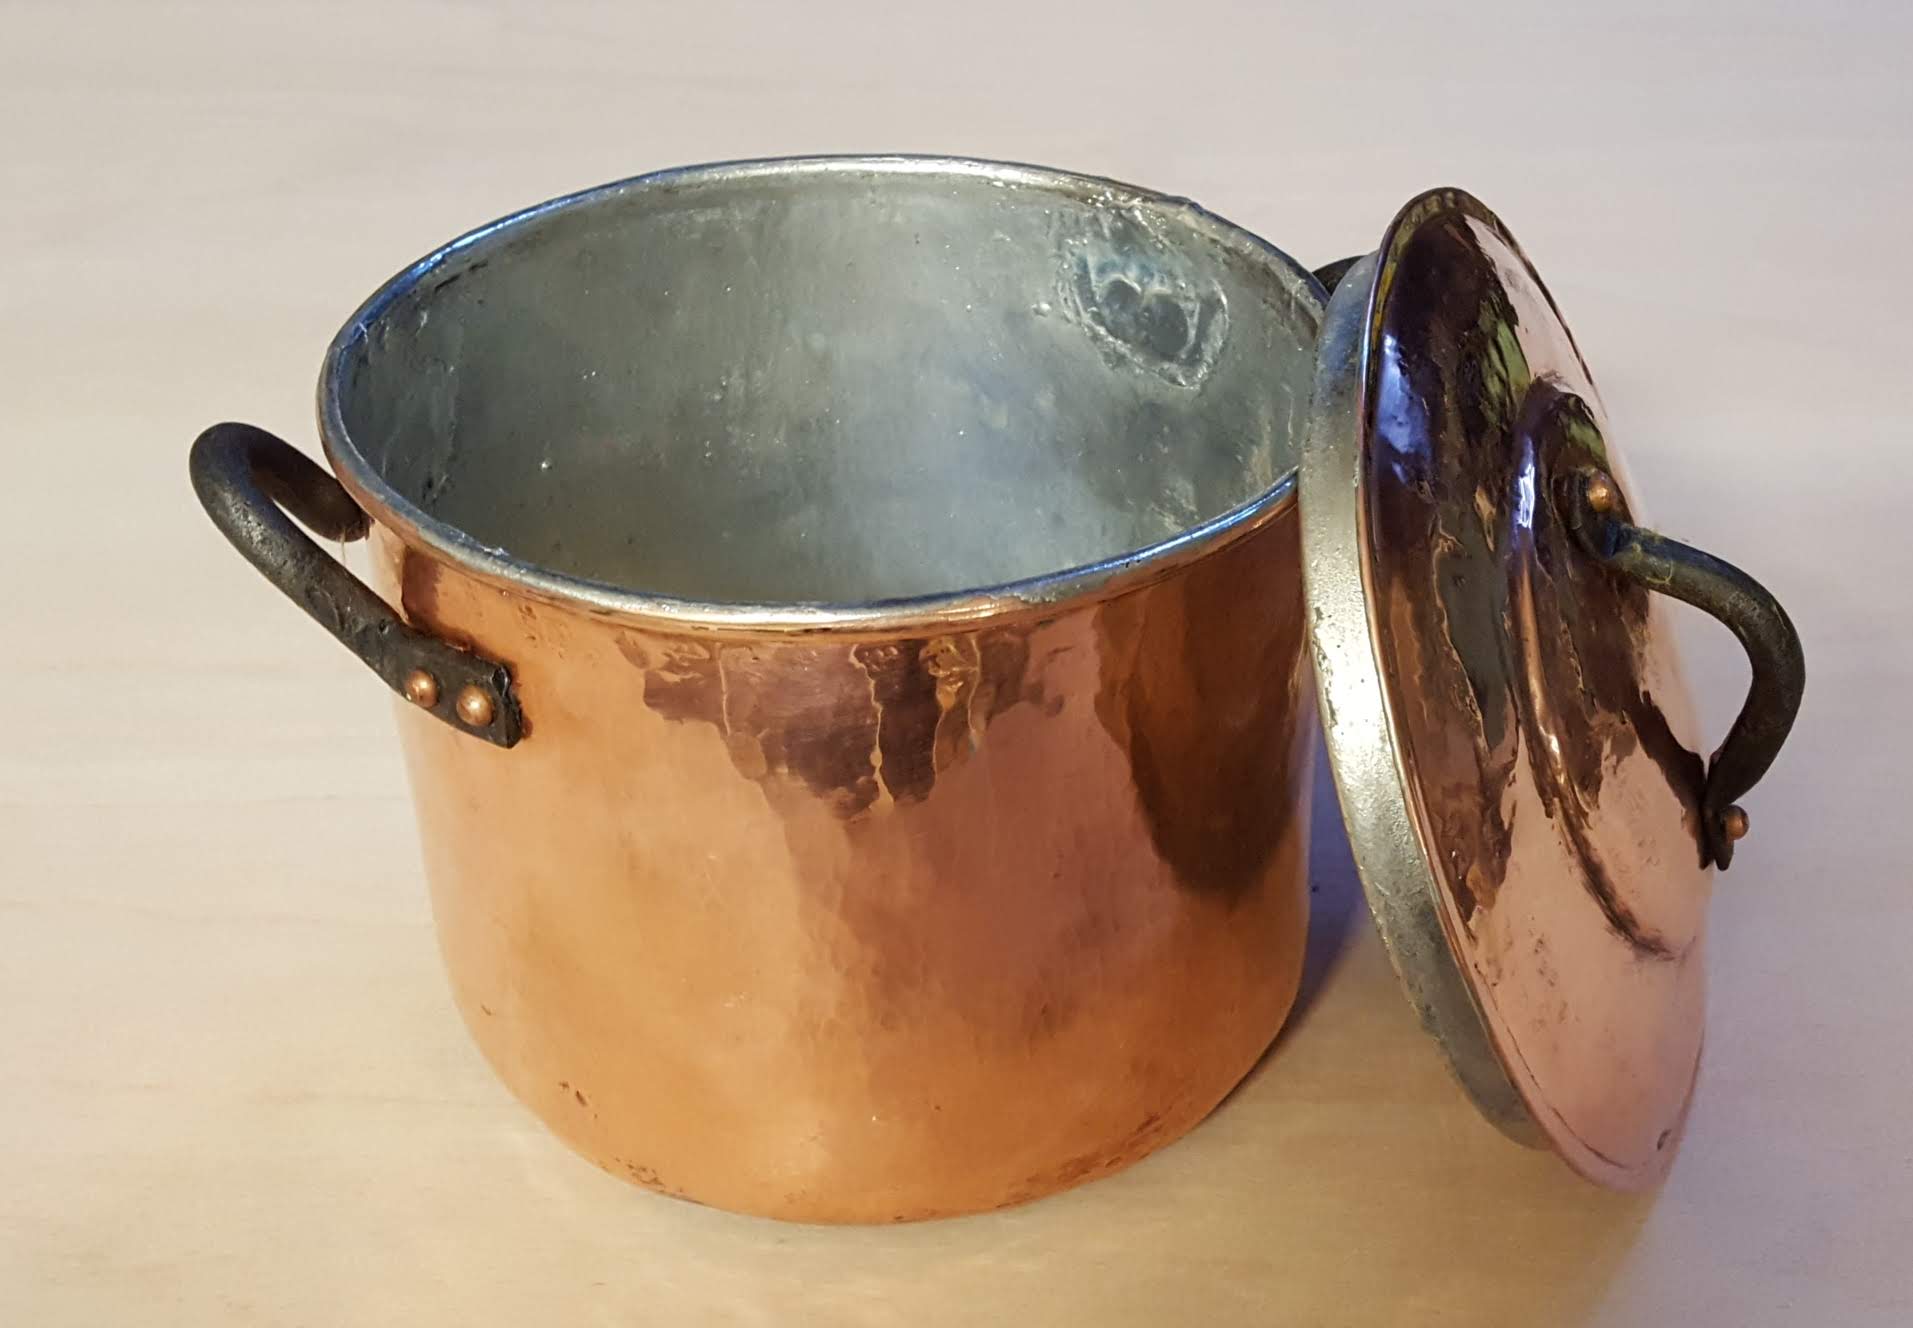 Copper pot with steel handles